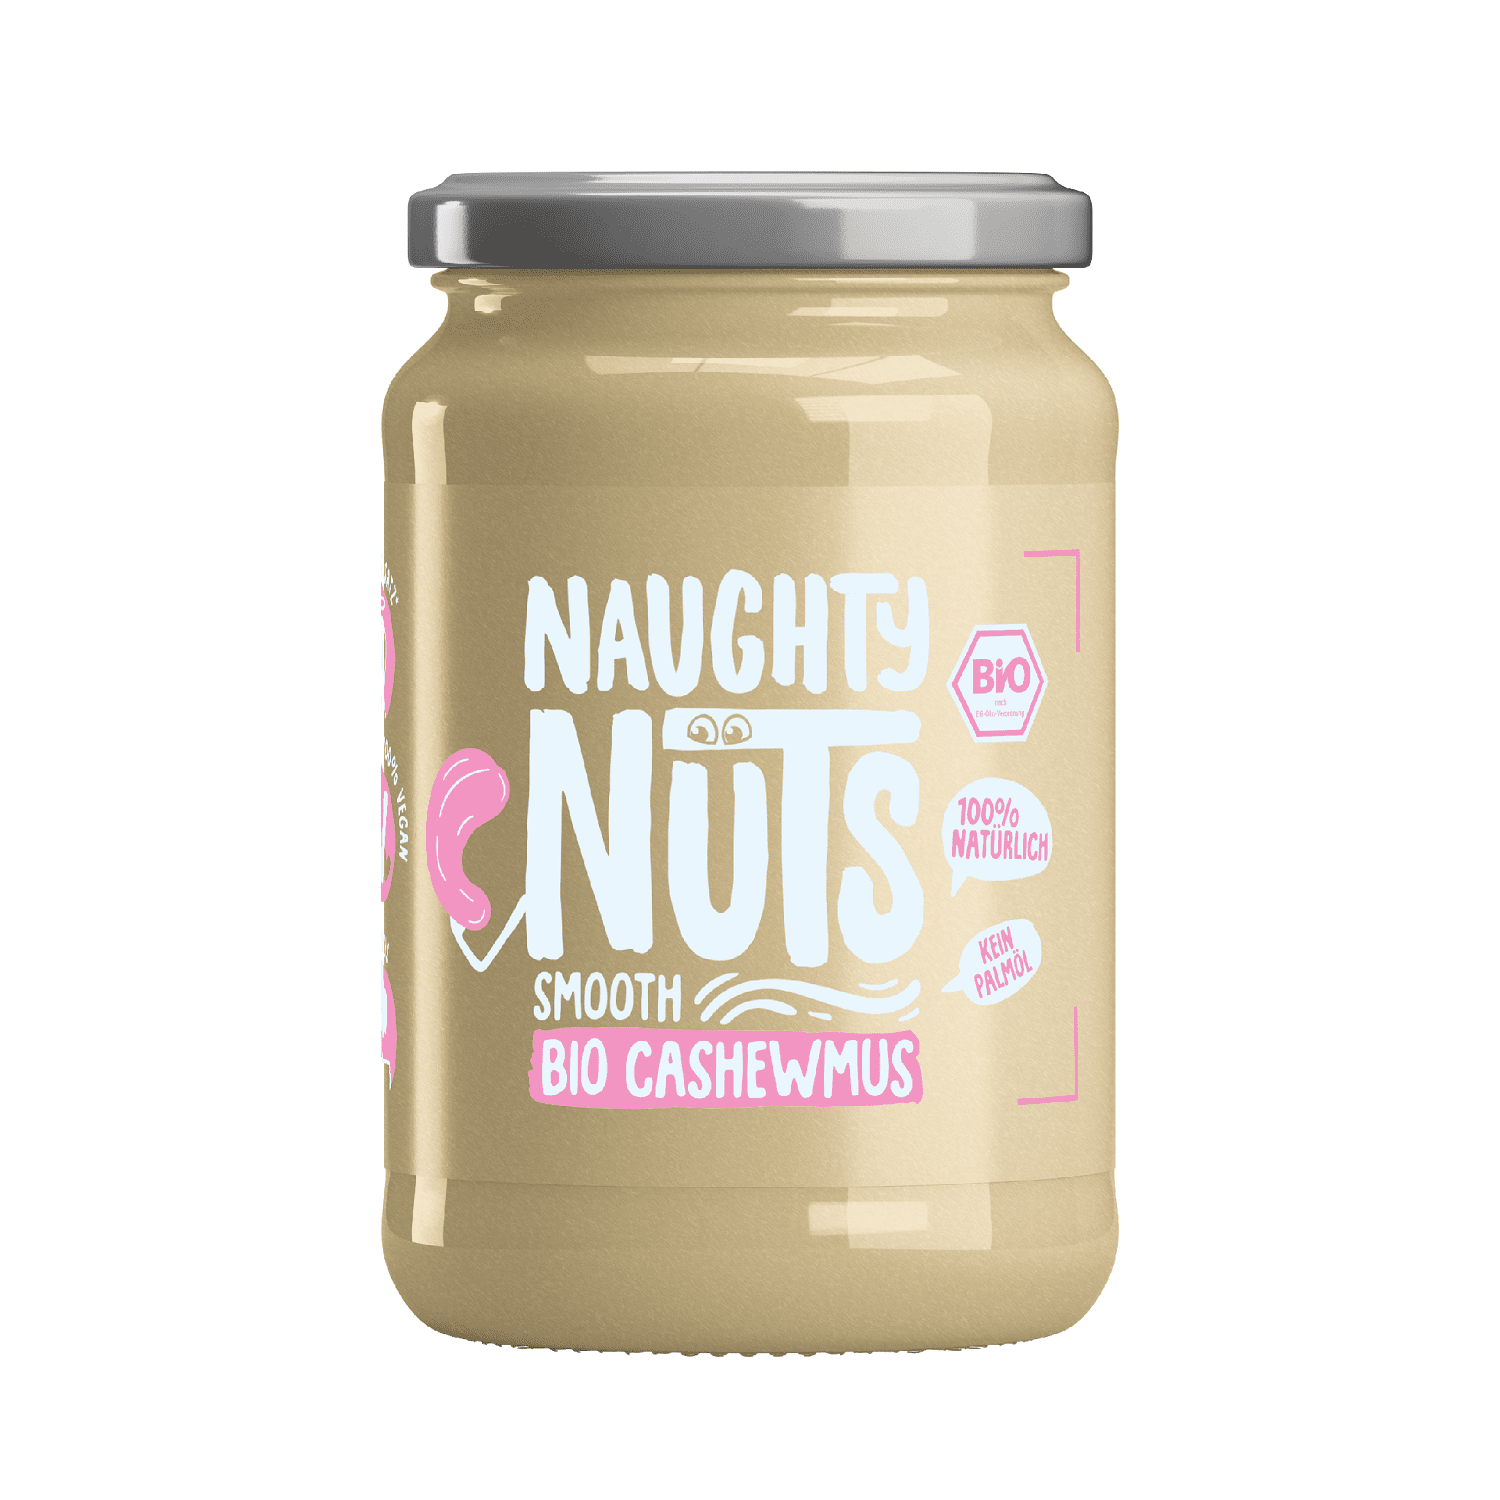 Naughty Nuts Bio Cashewmus Smooth 500g